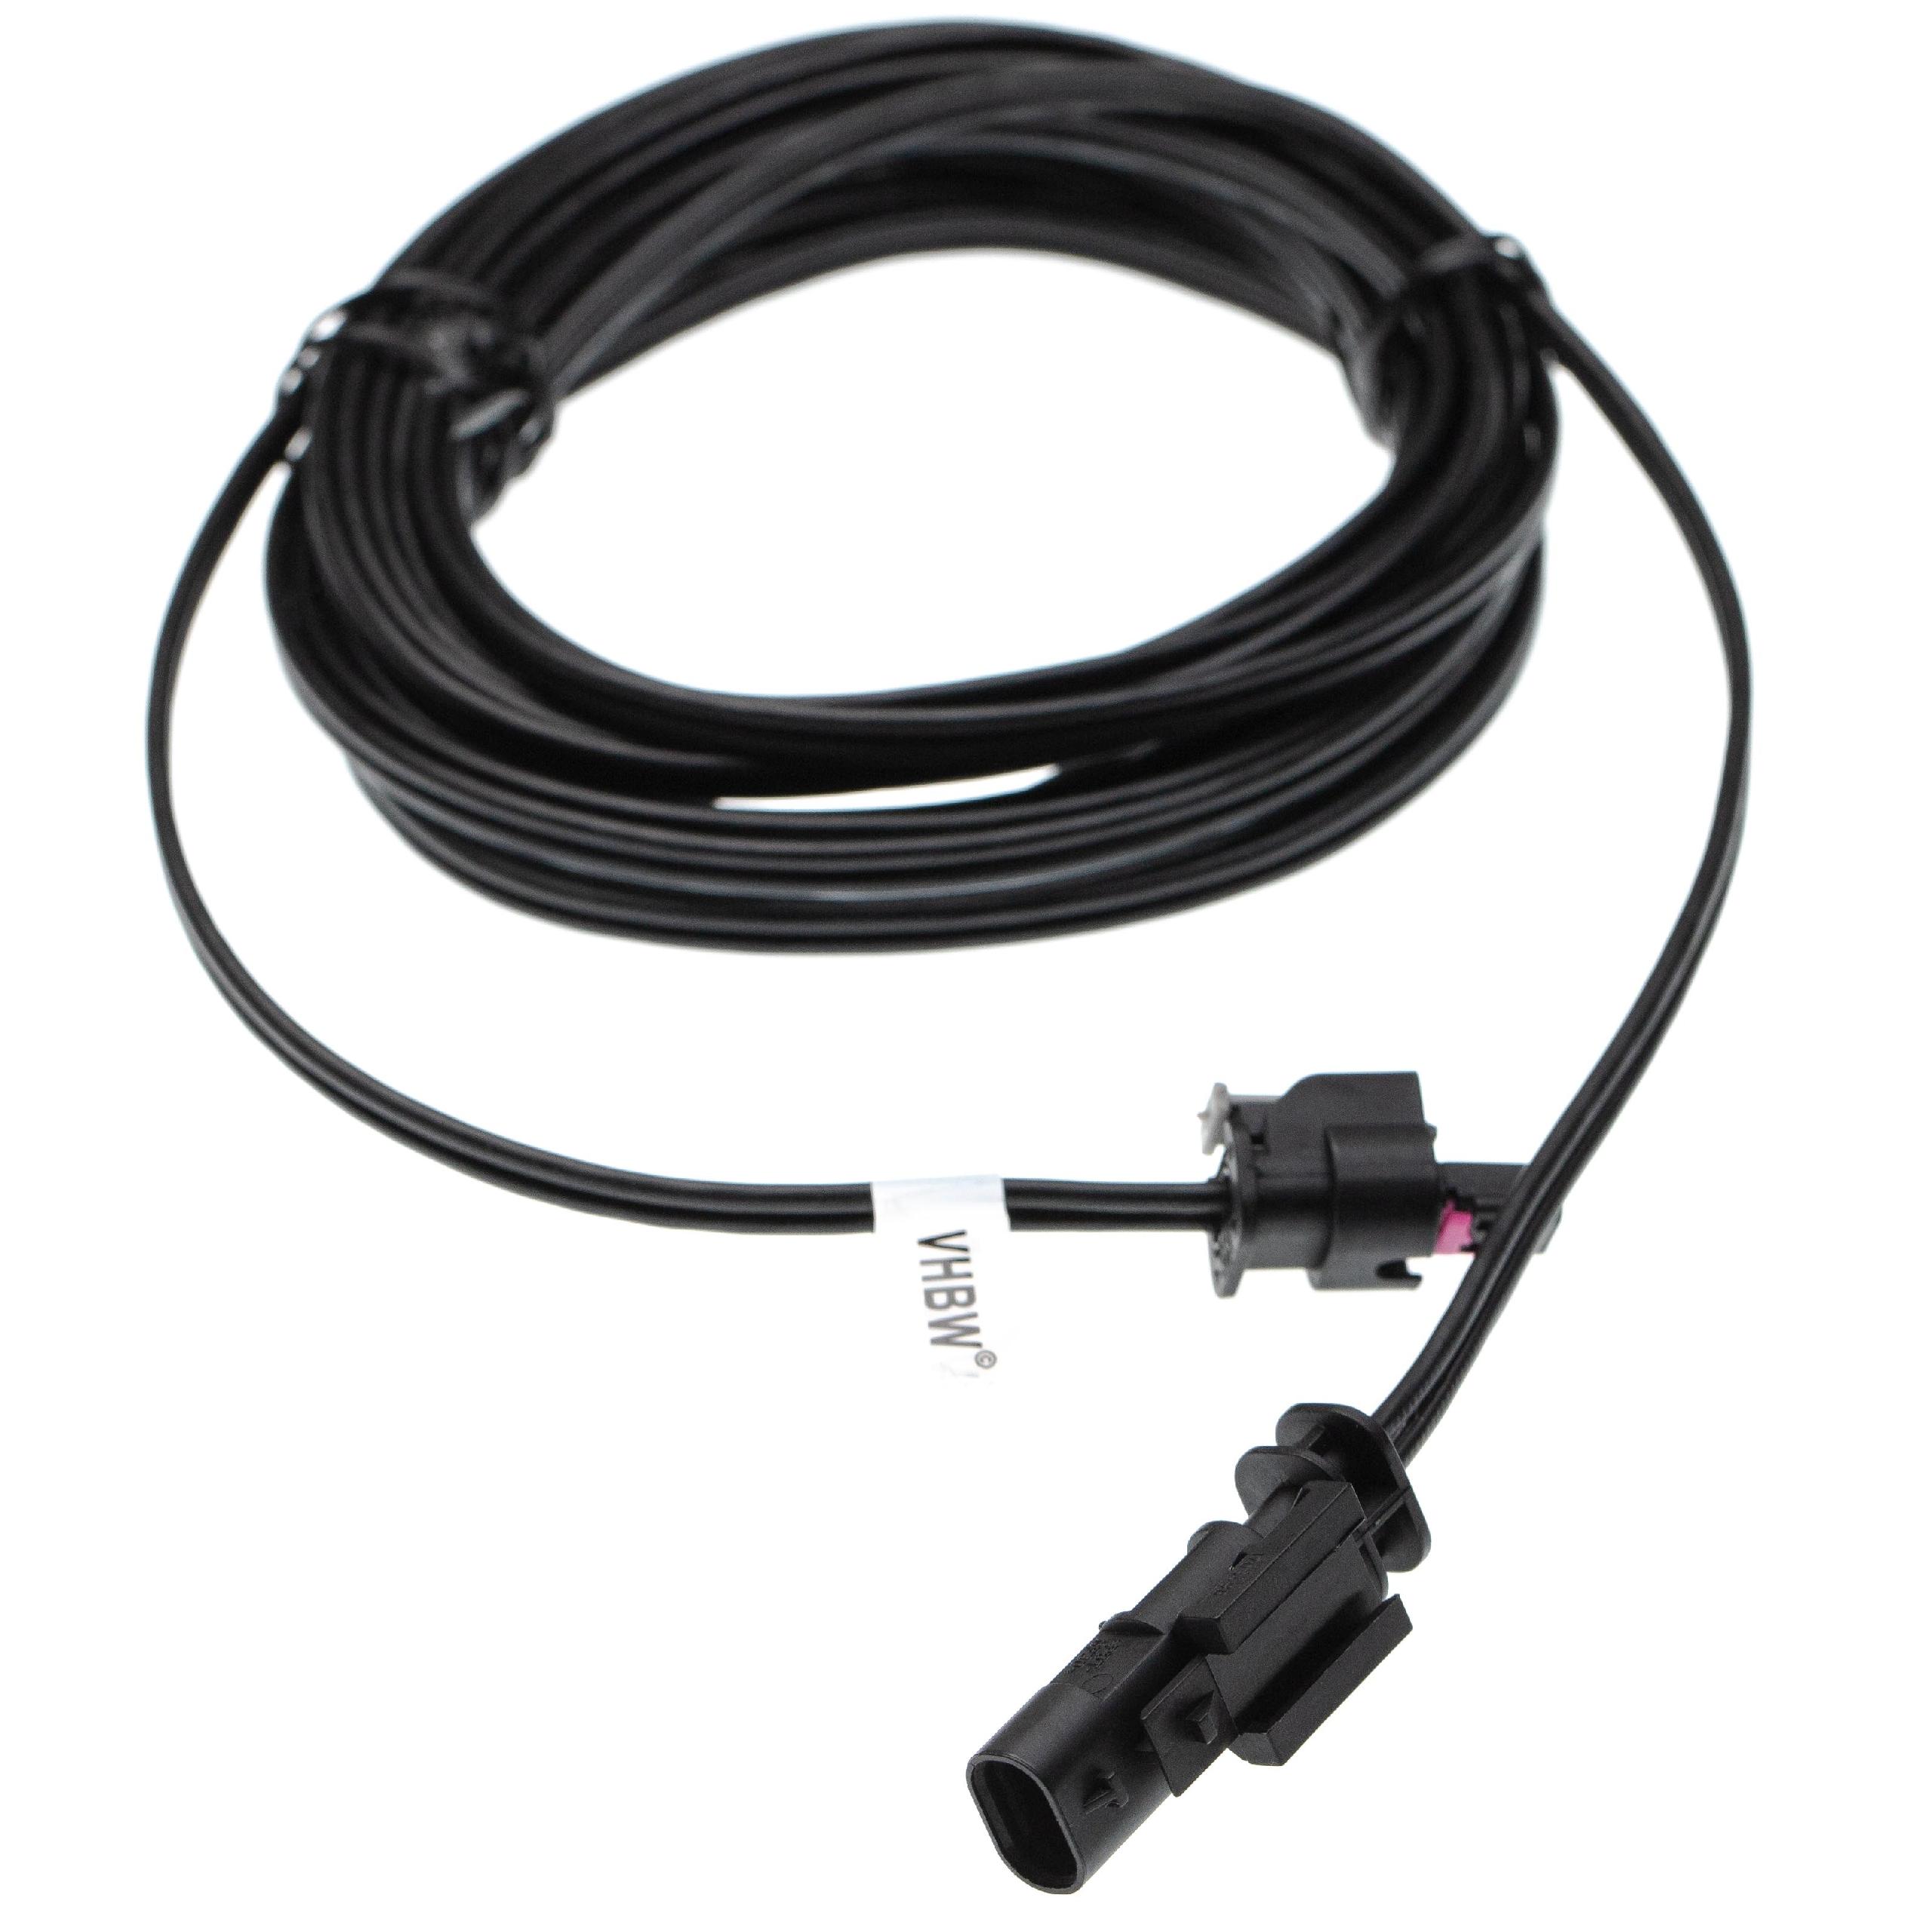 Low Voltage Cable replaces Husqvarna 581 16 66-01, 581 16 66-02 for HusqvarnaRobot Lawn Mower etc. 5 m